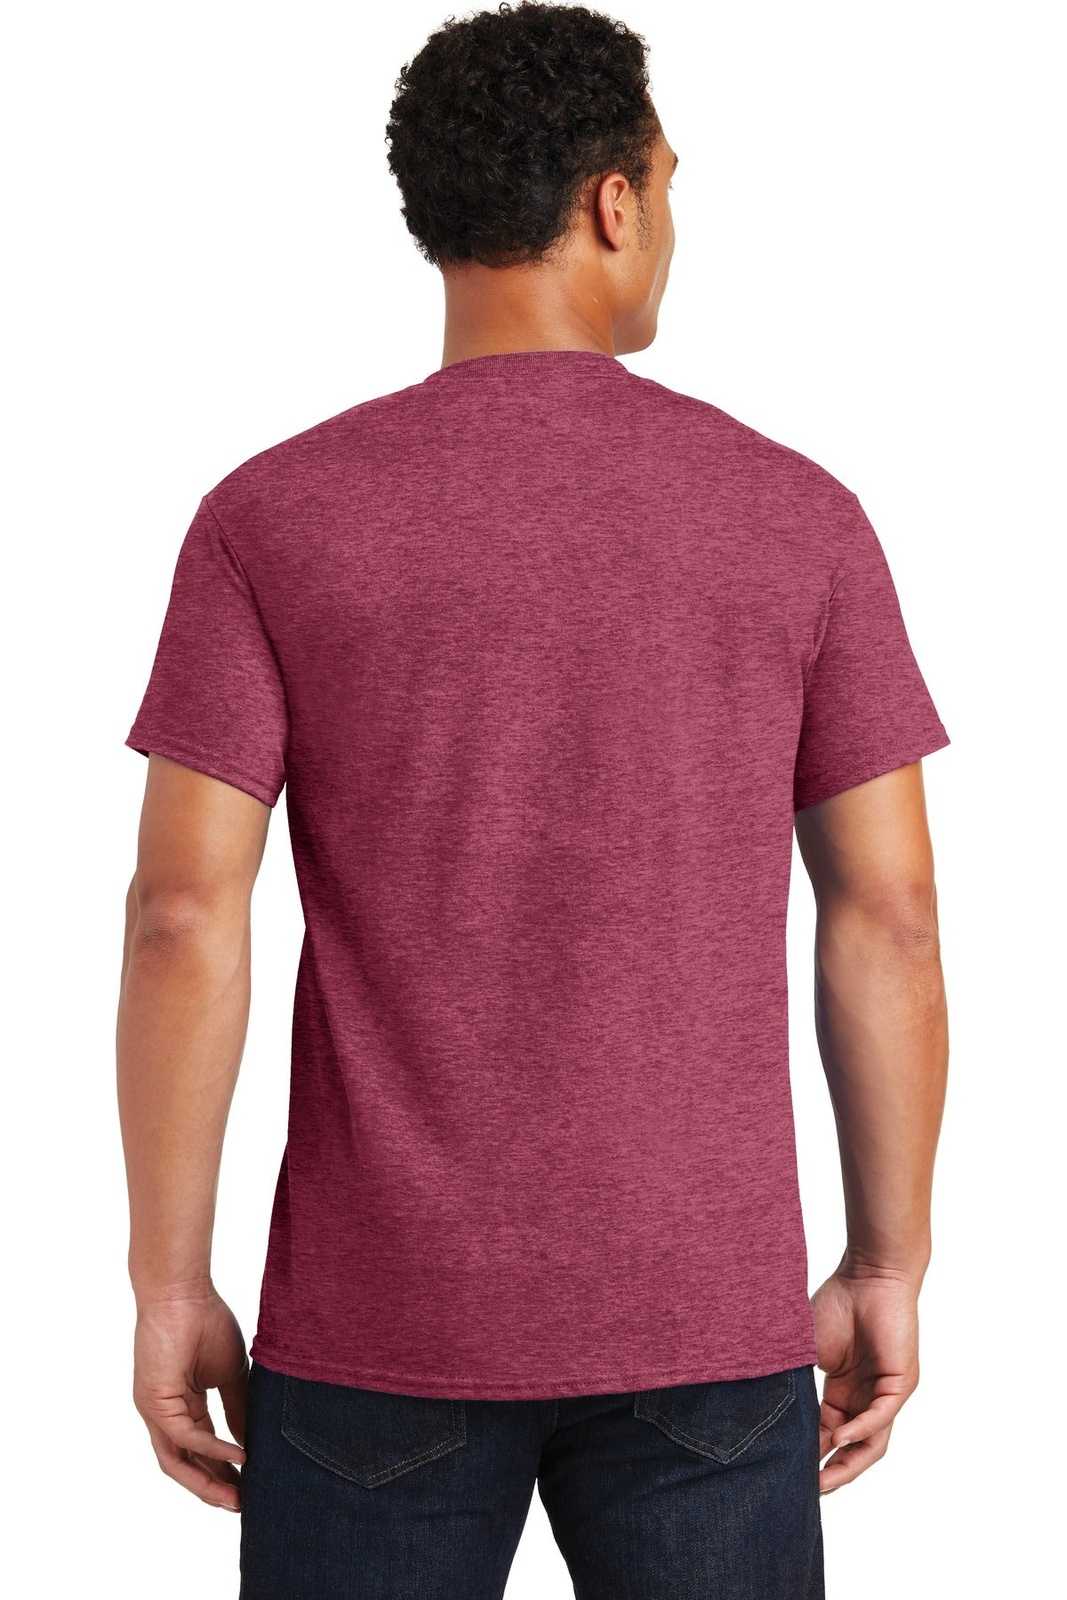 Gildan 2000 Ultra Cotton 100% Cotton T-Shirt - Heathered Cardinal - HIT a Double